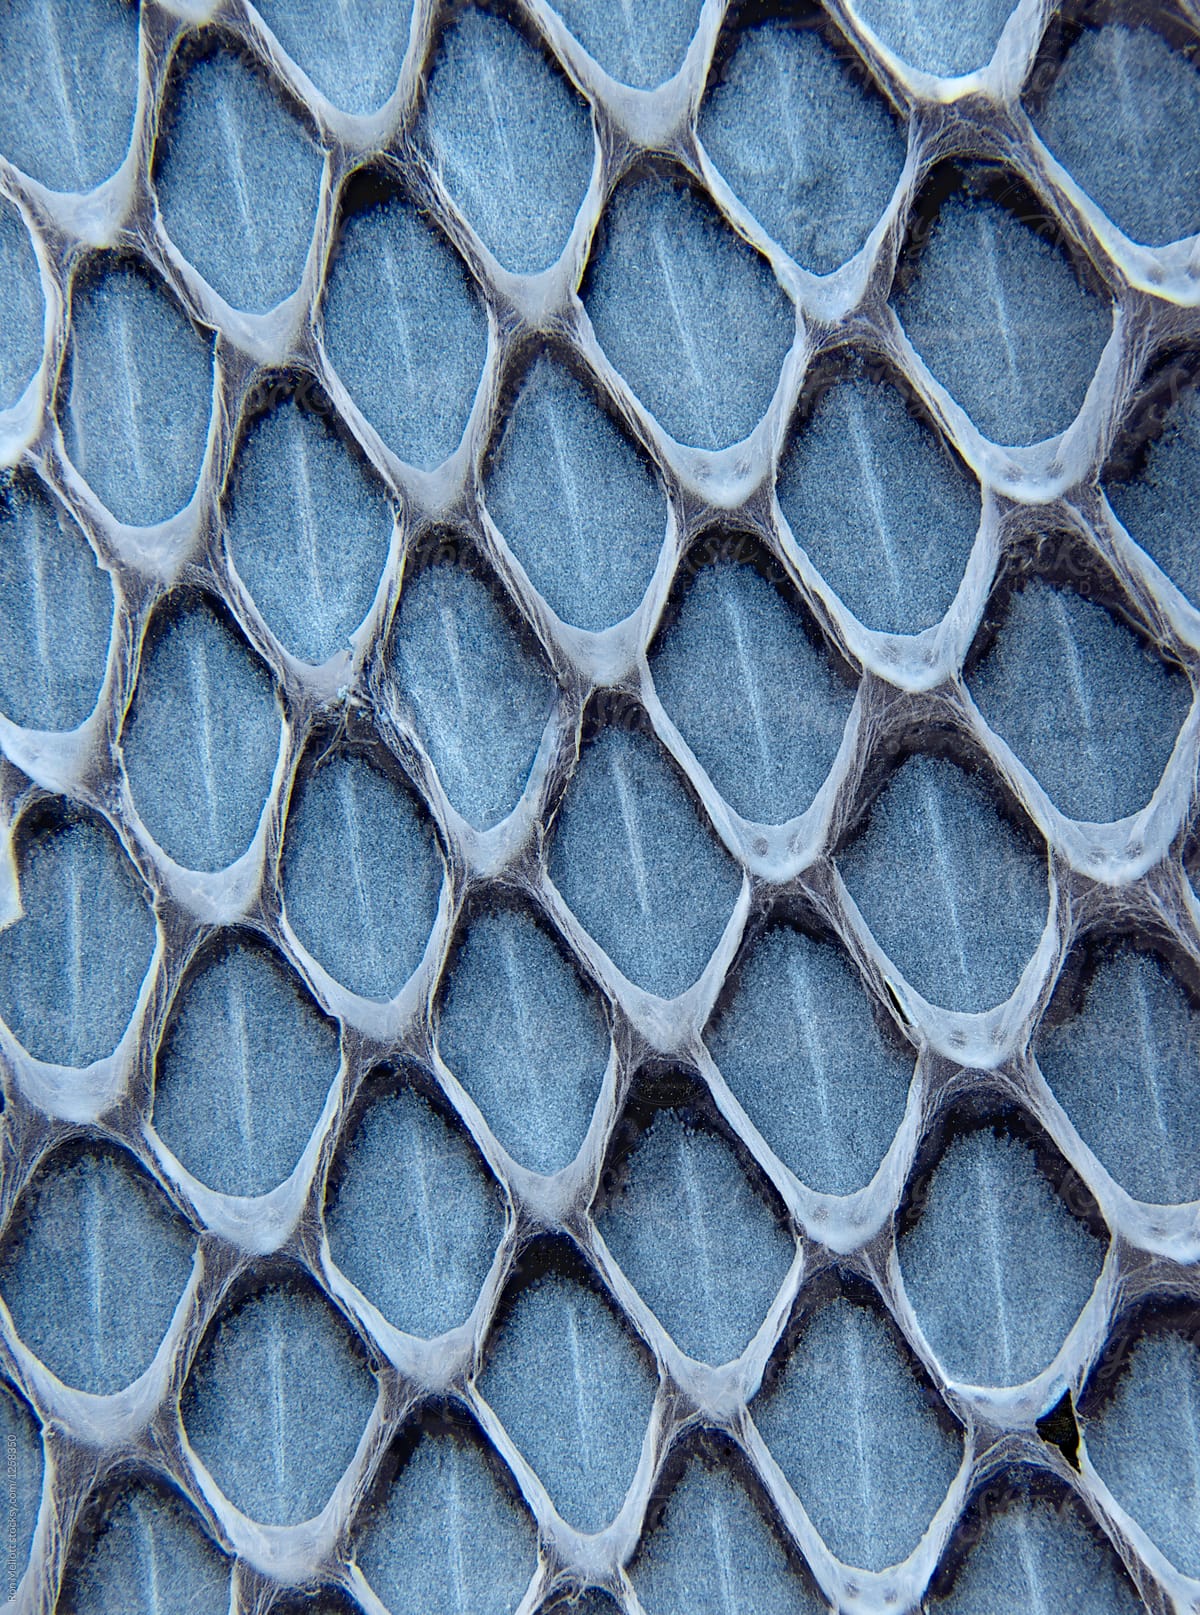 Closeup macro abstract patterns of a shed snake skin snake skin